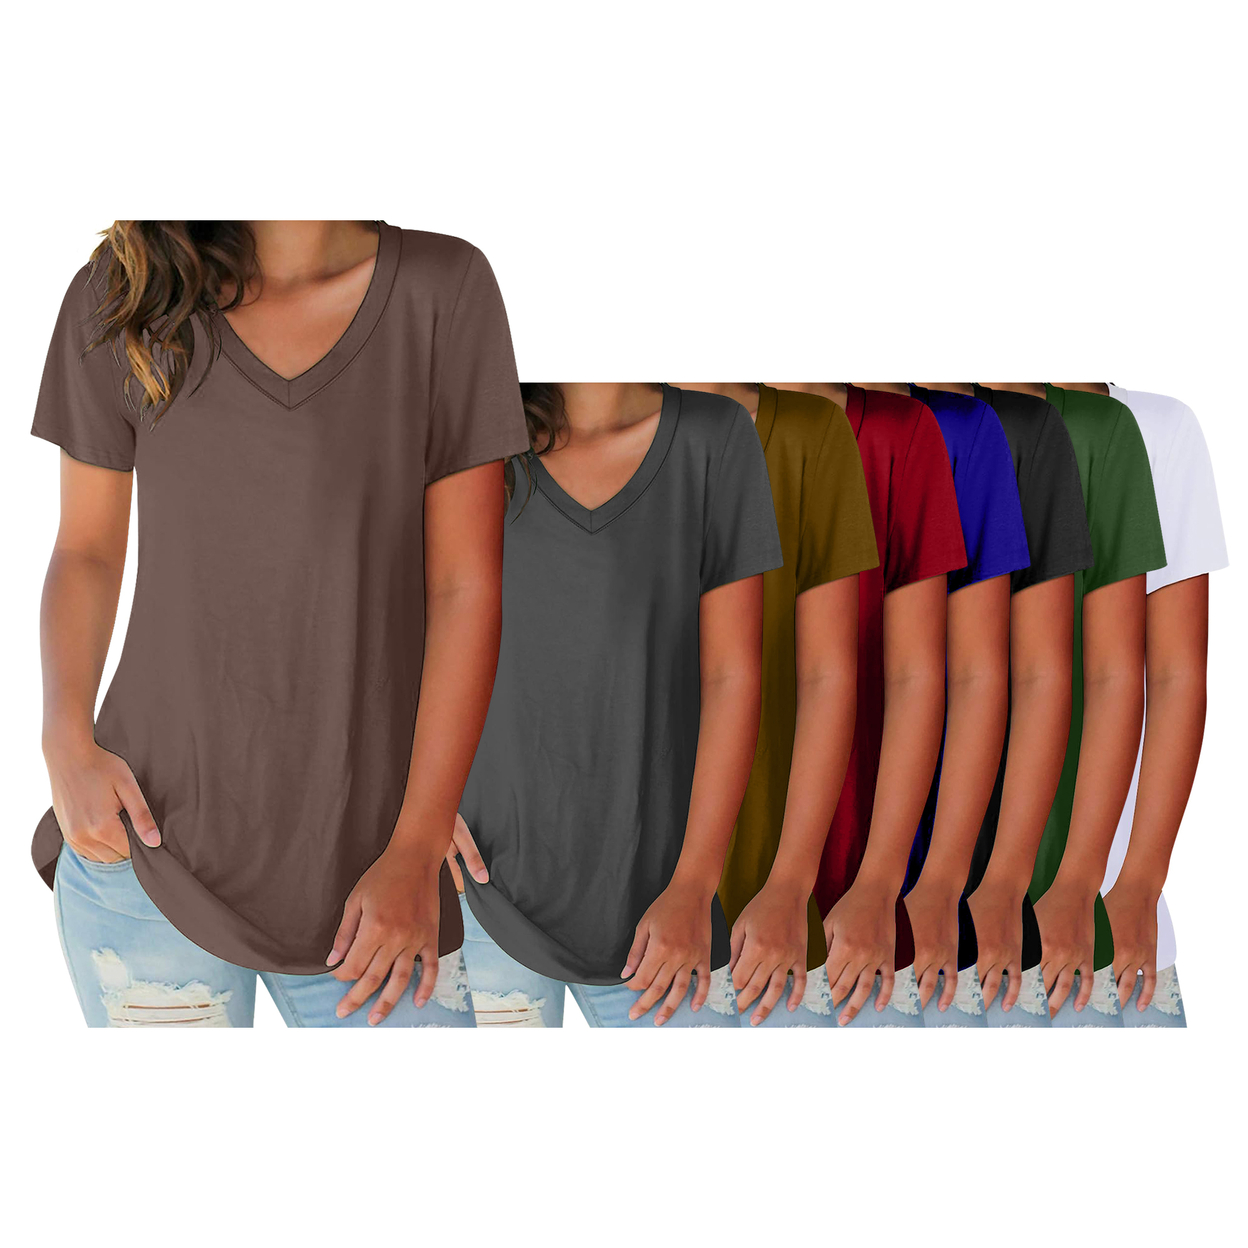 3-Pack: Women's Ultra Soft Smooth Cotton Blend Basic V-Neck Short Sleeve Shirts - Black, Navy, Green, Large